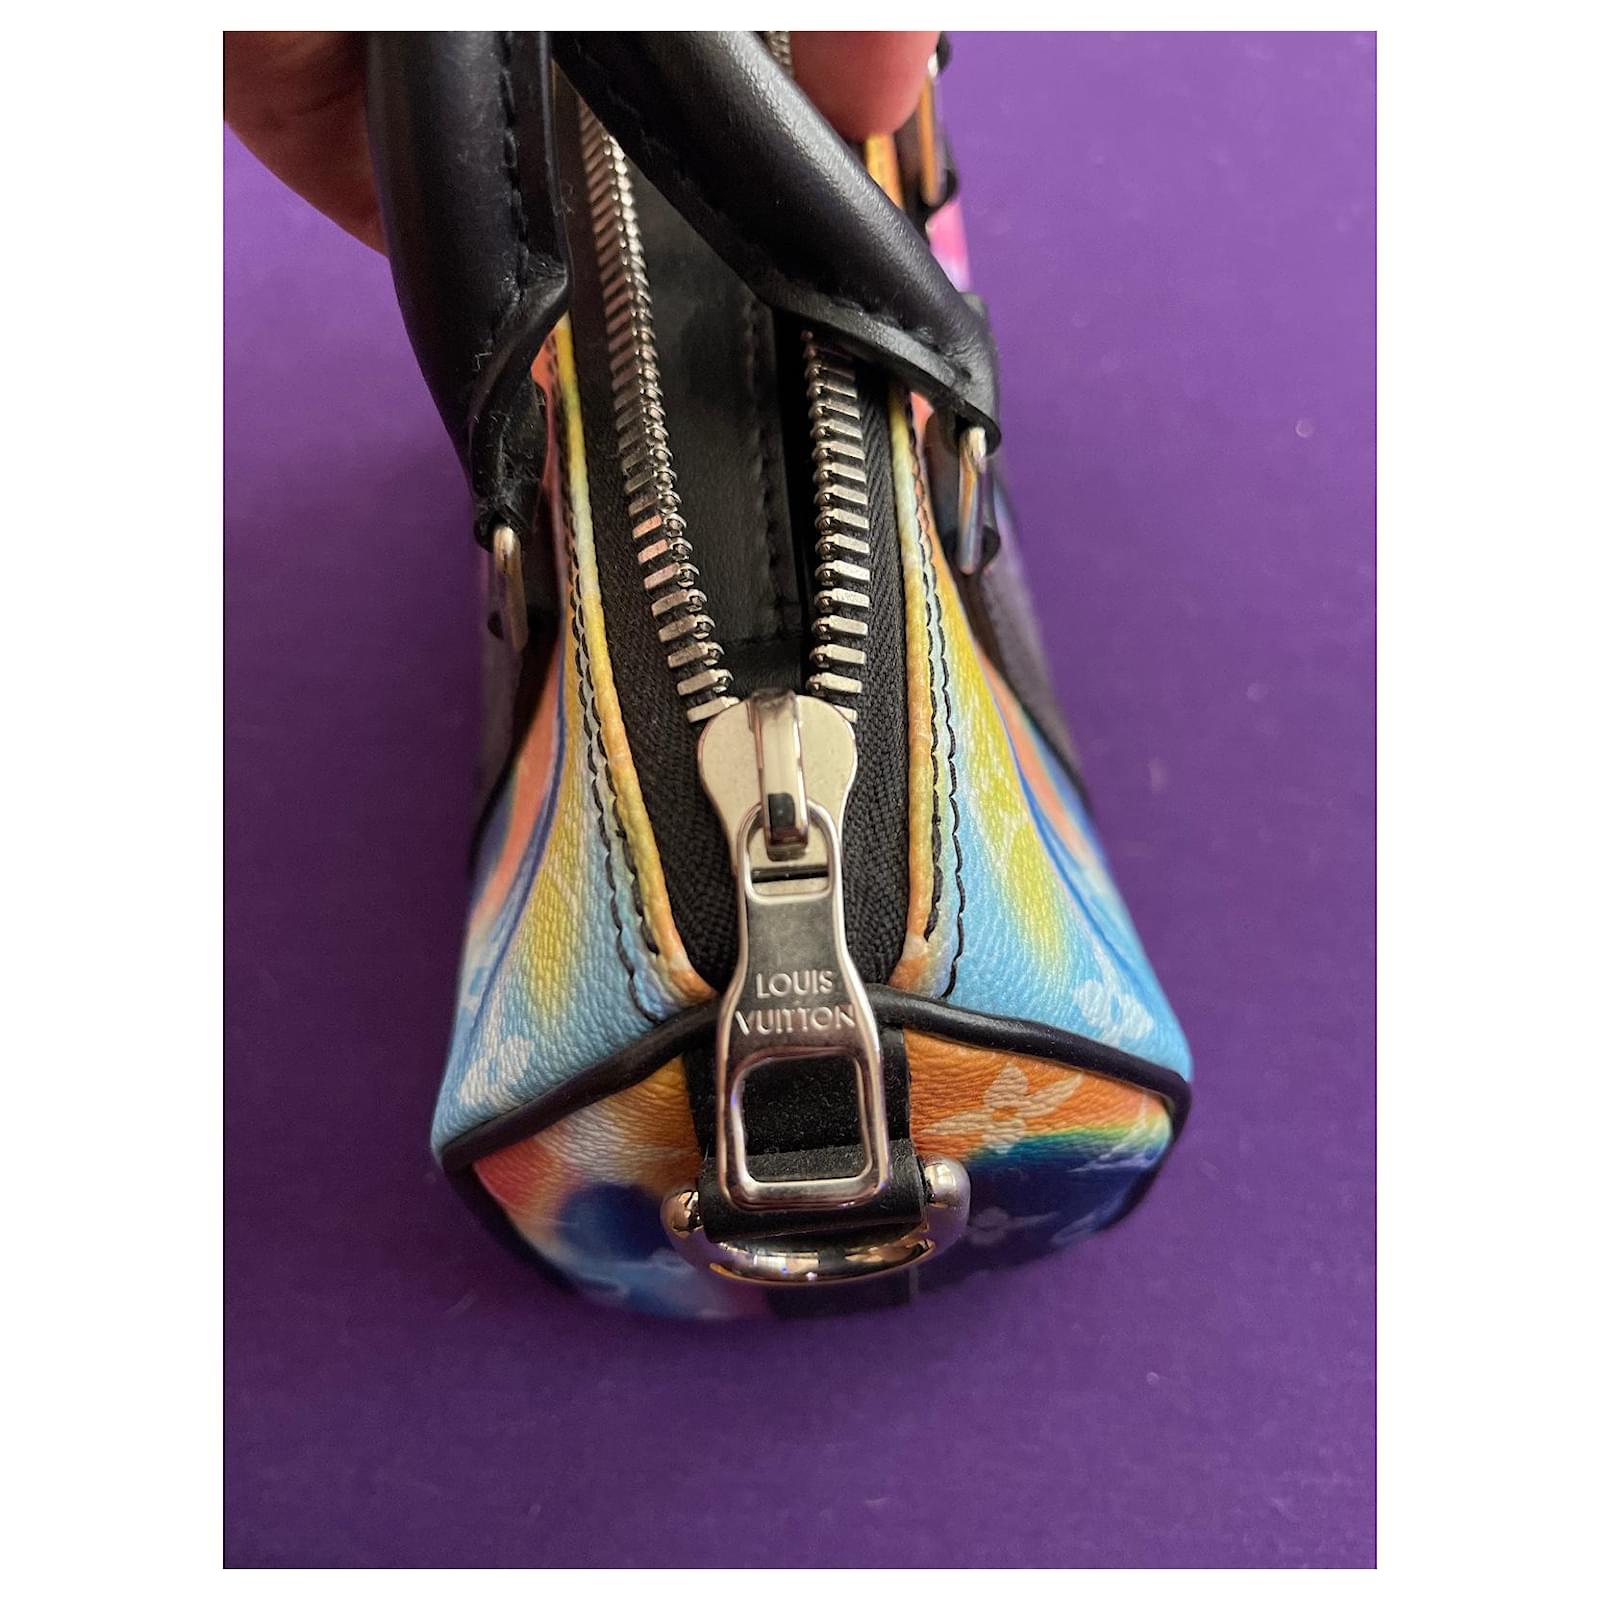 Keepall Xs sunset tie-dye starburst bag clutch sling Louis Vuitton